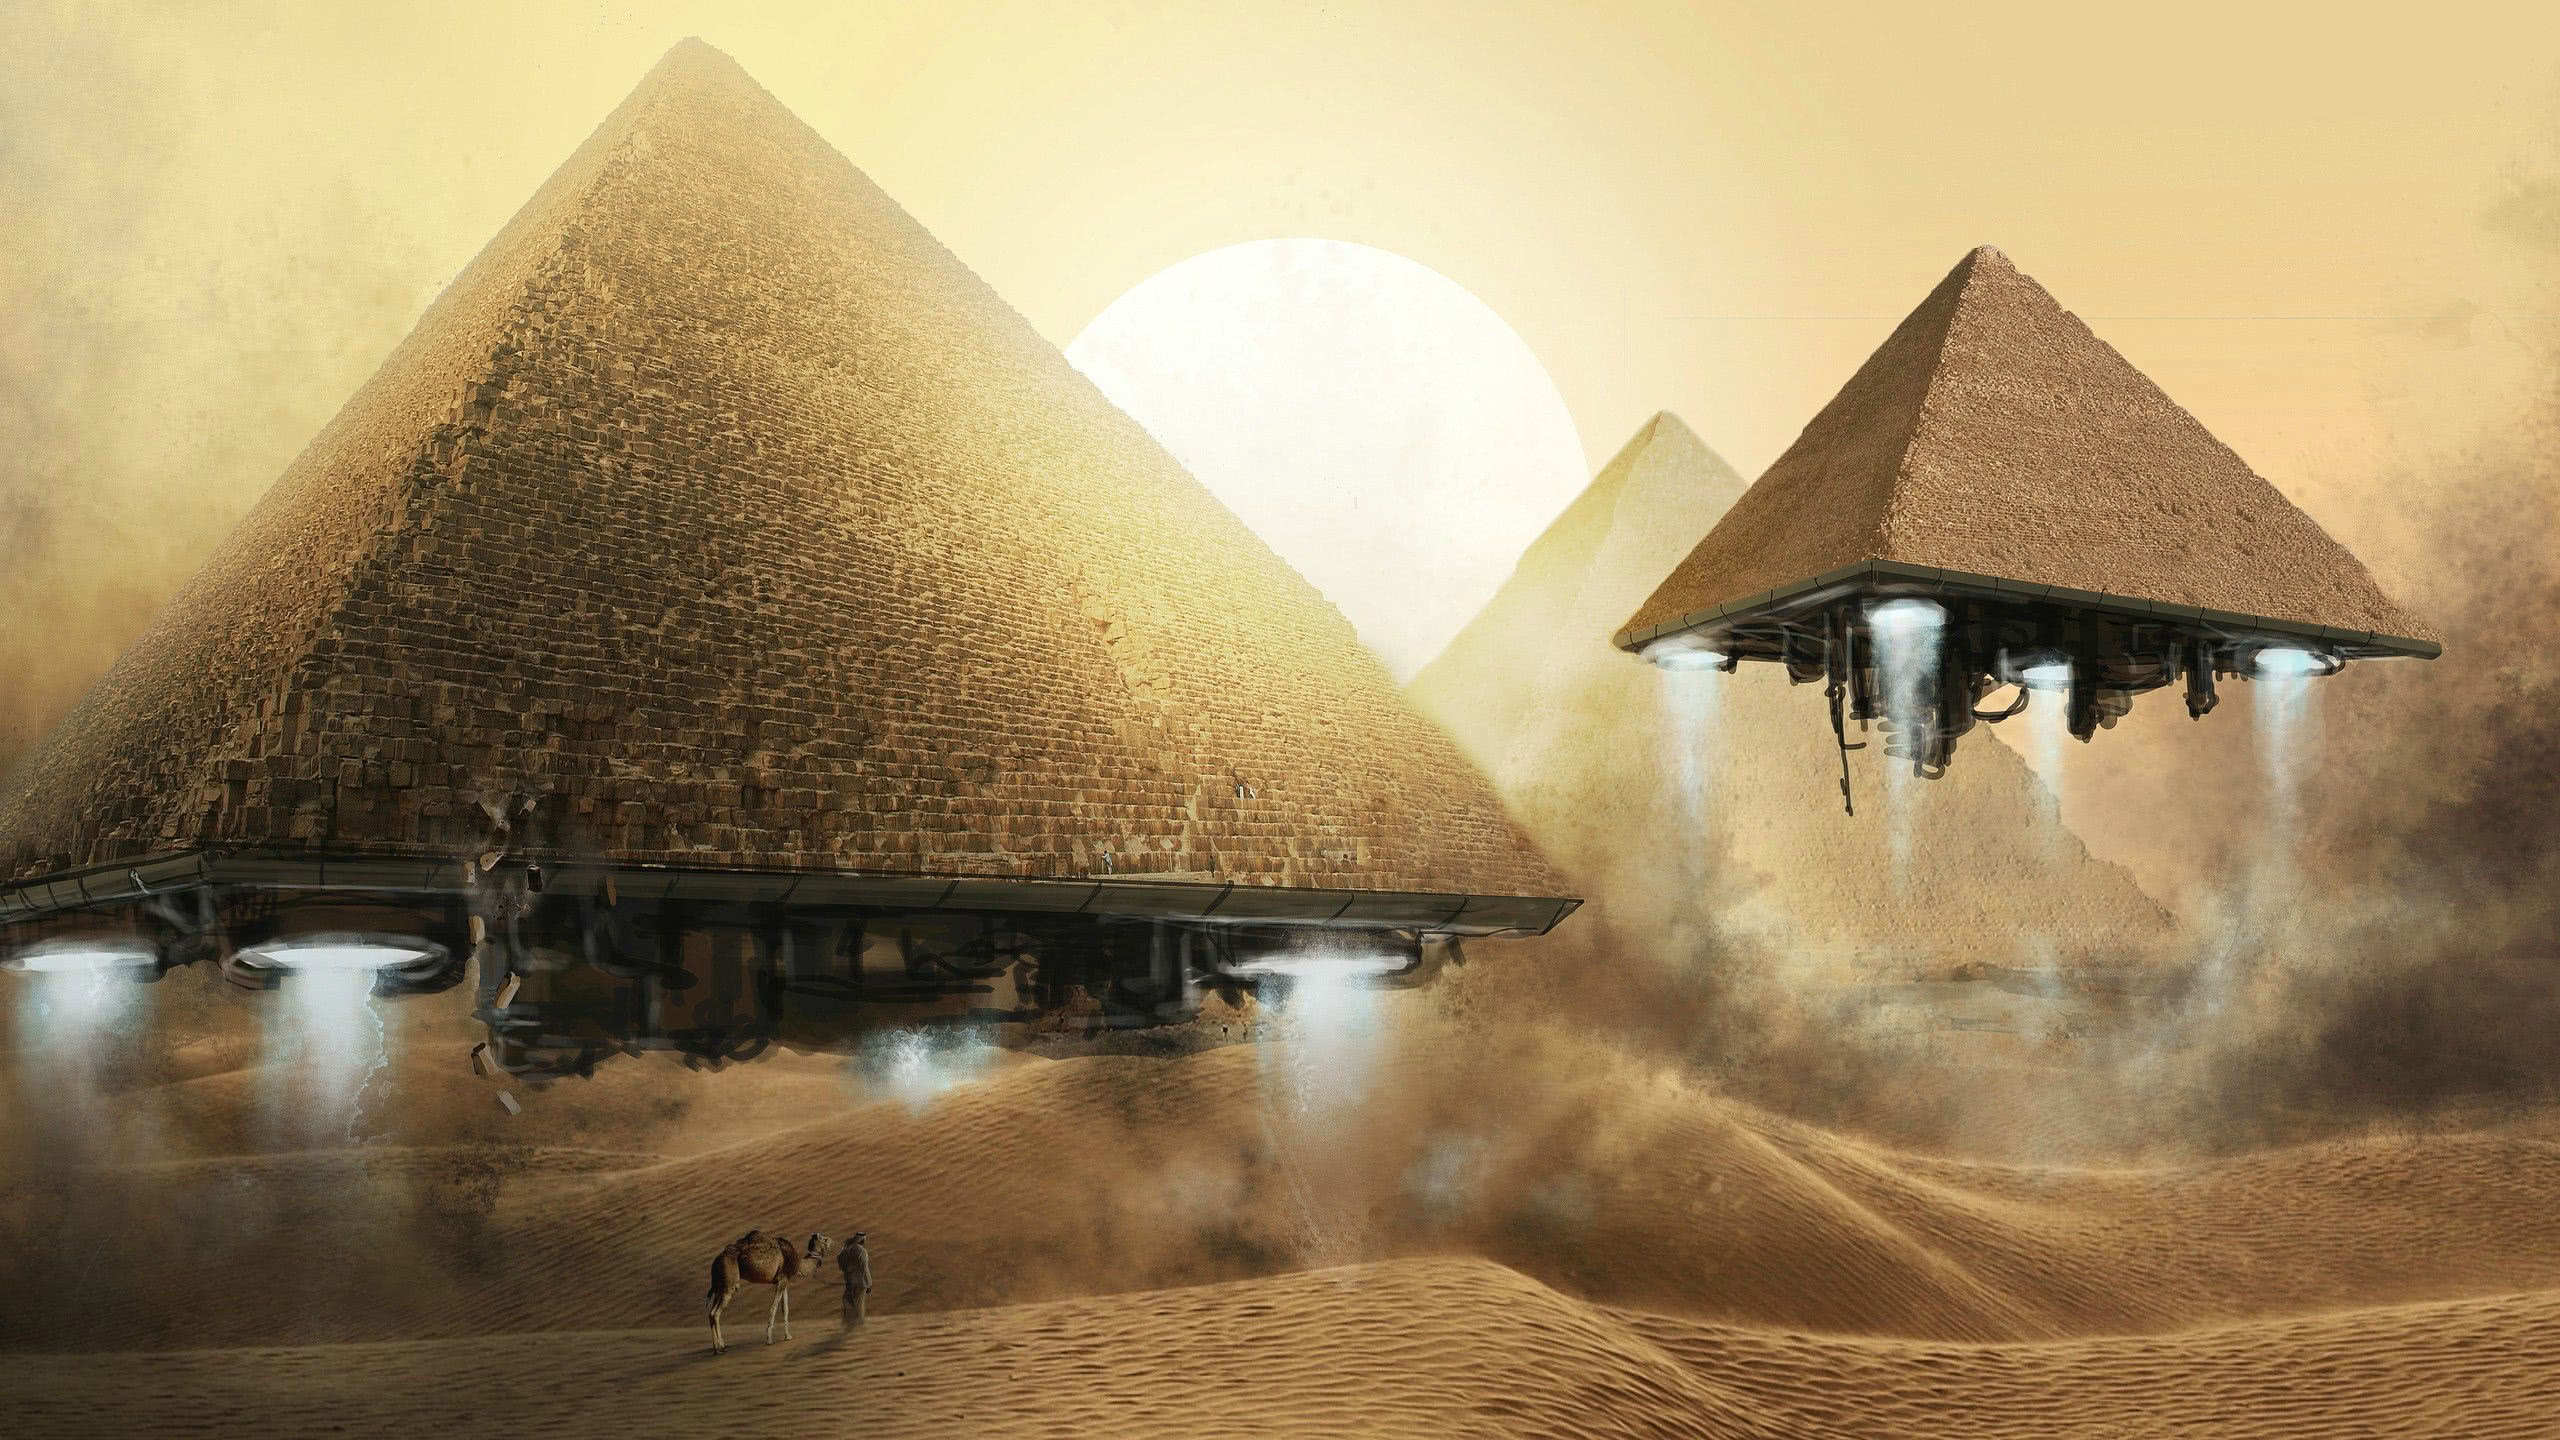 Alien Pyramids WqHD 1440p Wallpaper Cc